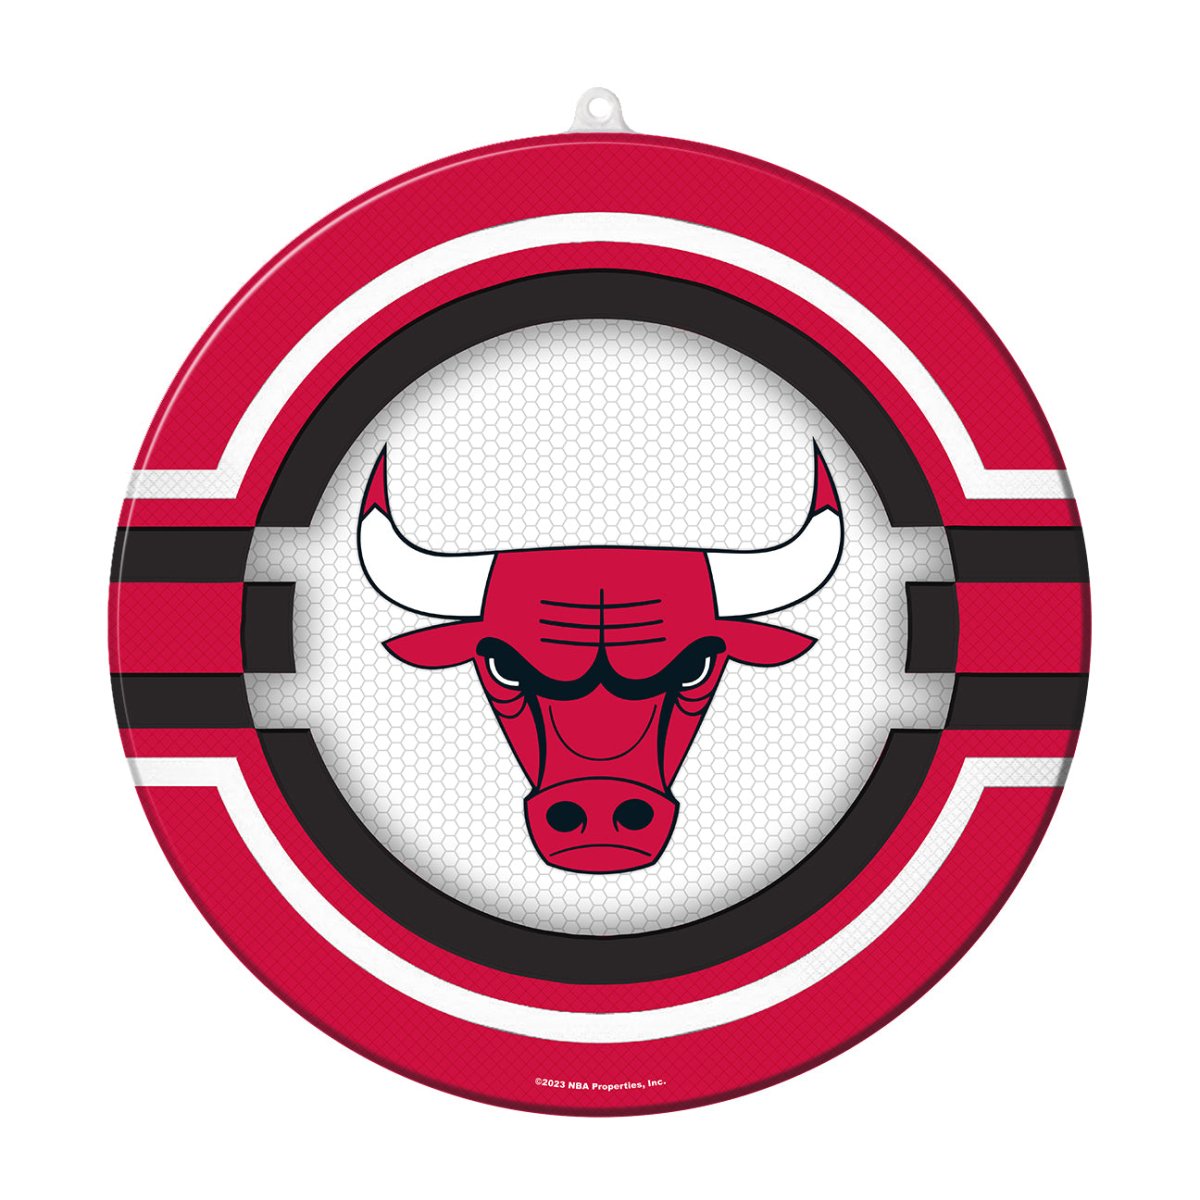 Chicago Bulls: Sun Catcher Ornament 4- Pack